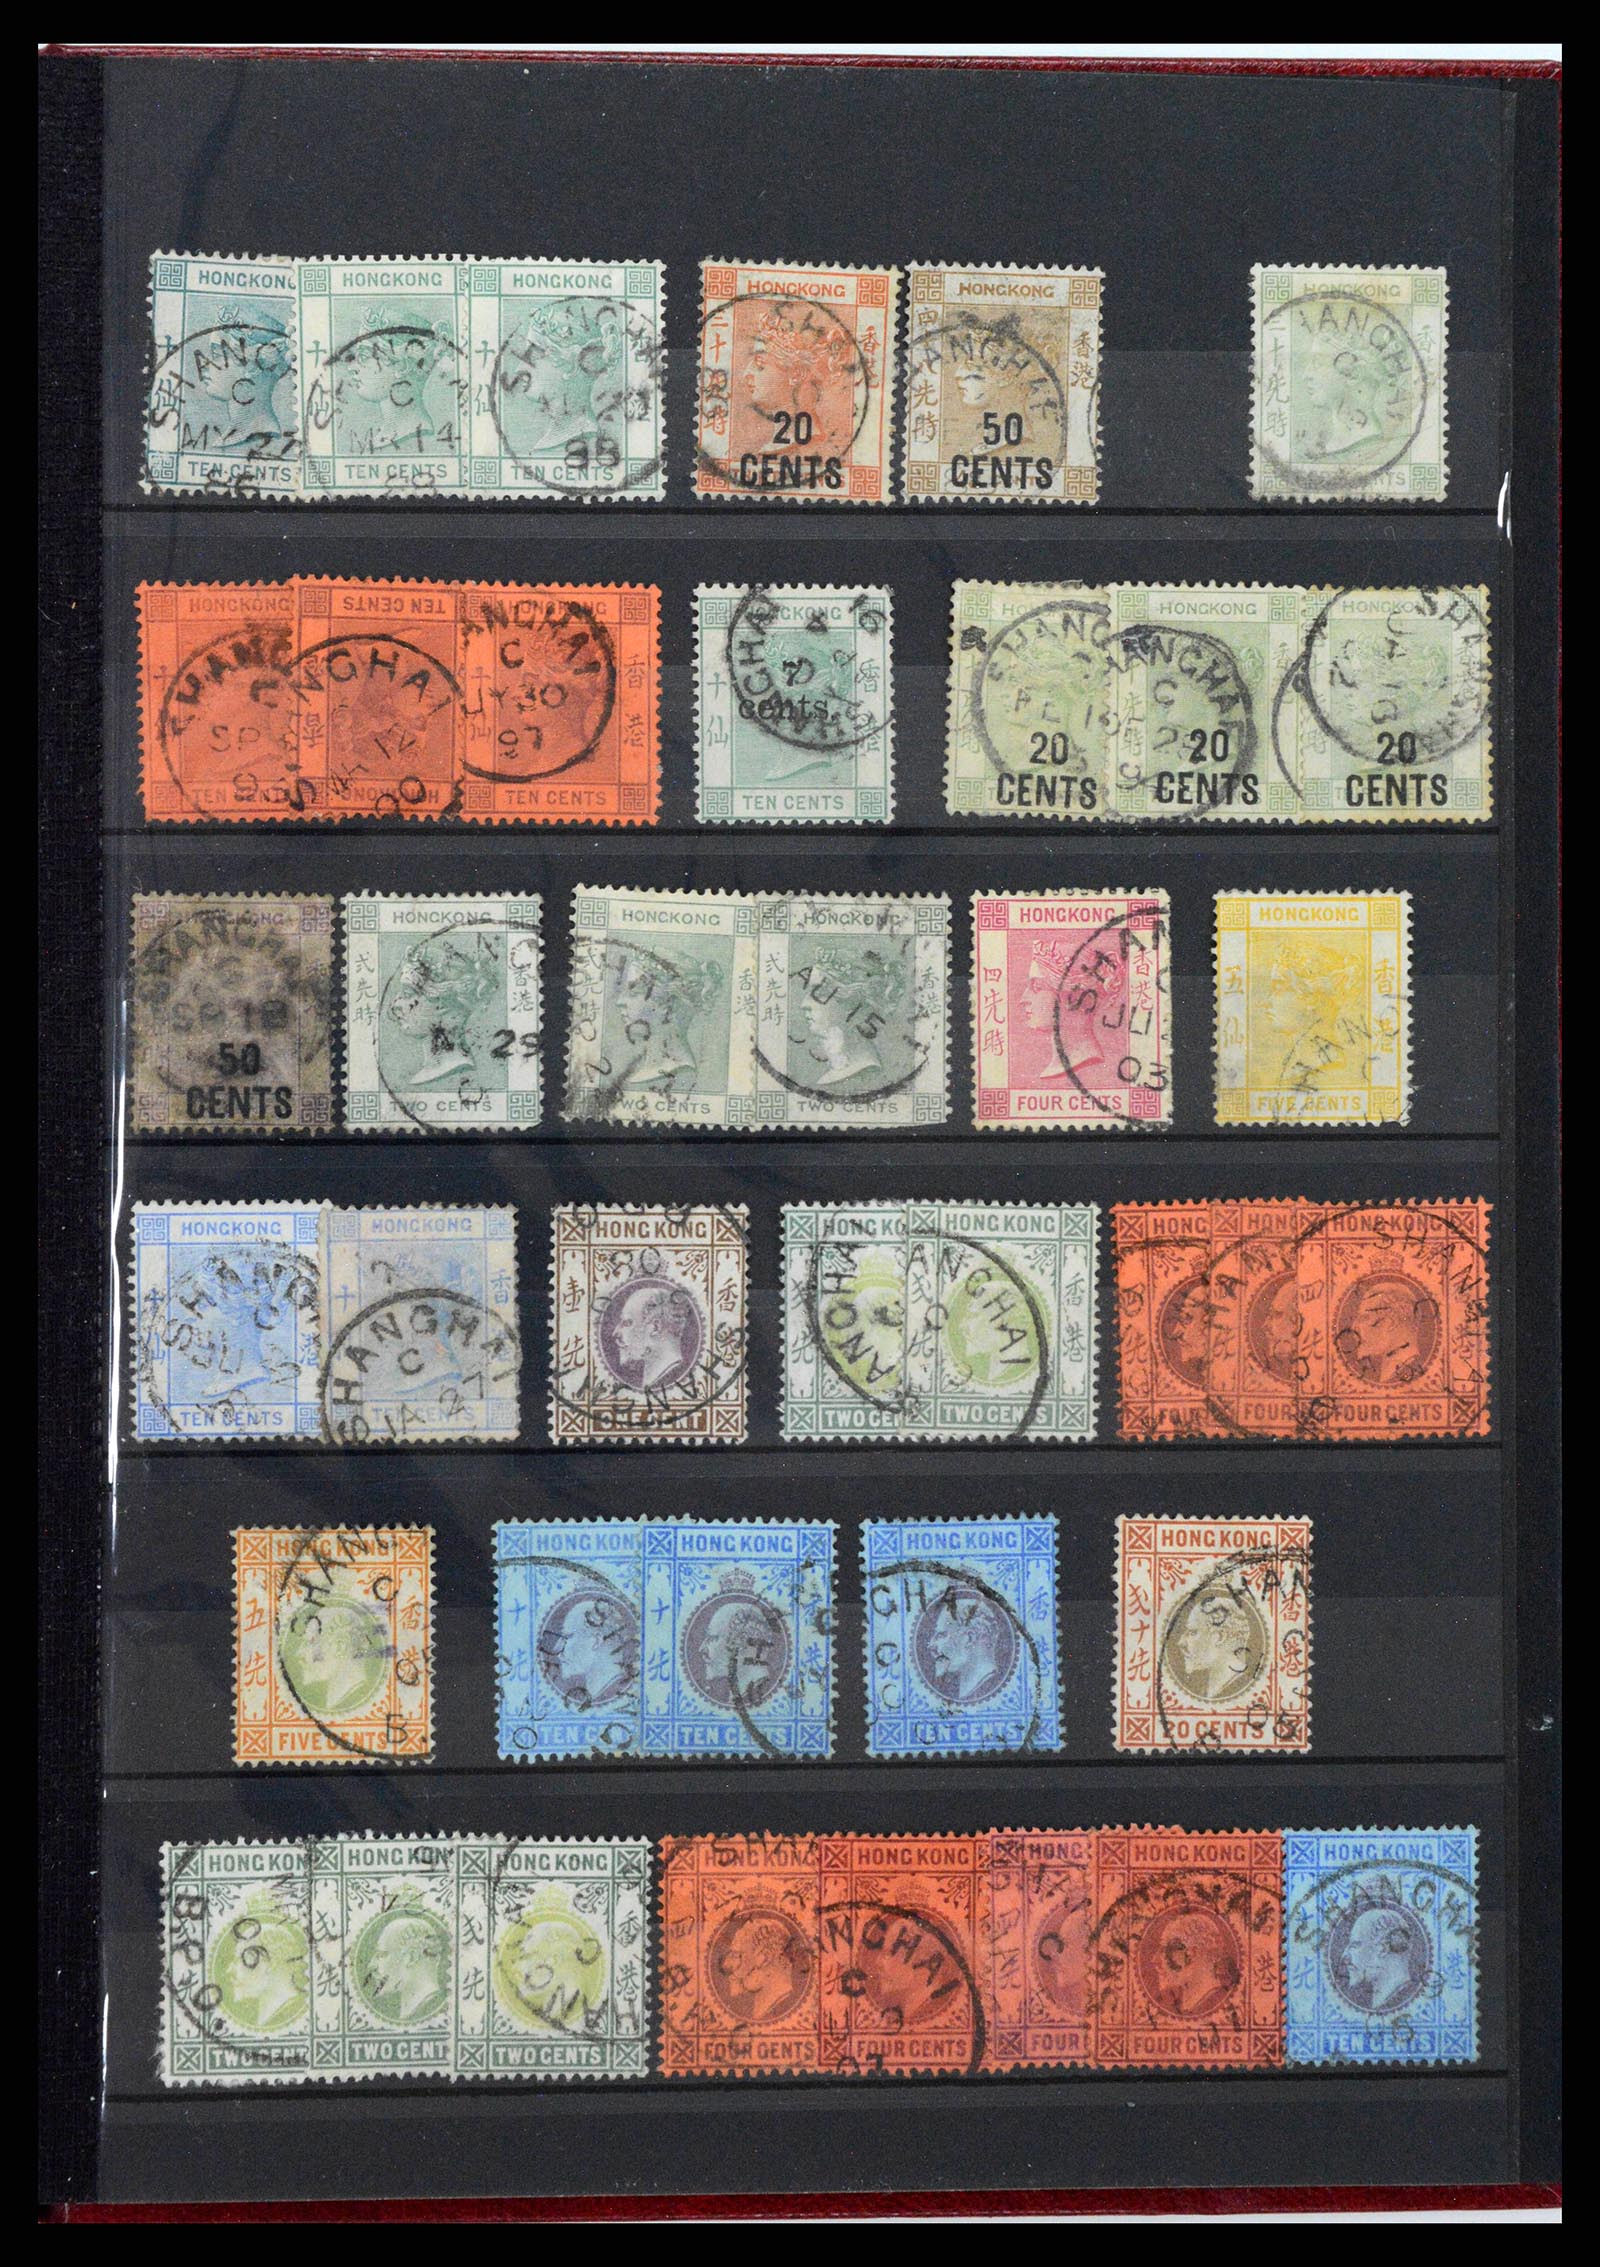 38844 0007 - Stamp collection 38844 Hong Kong treaty ports 1880-1922.